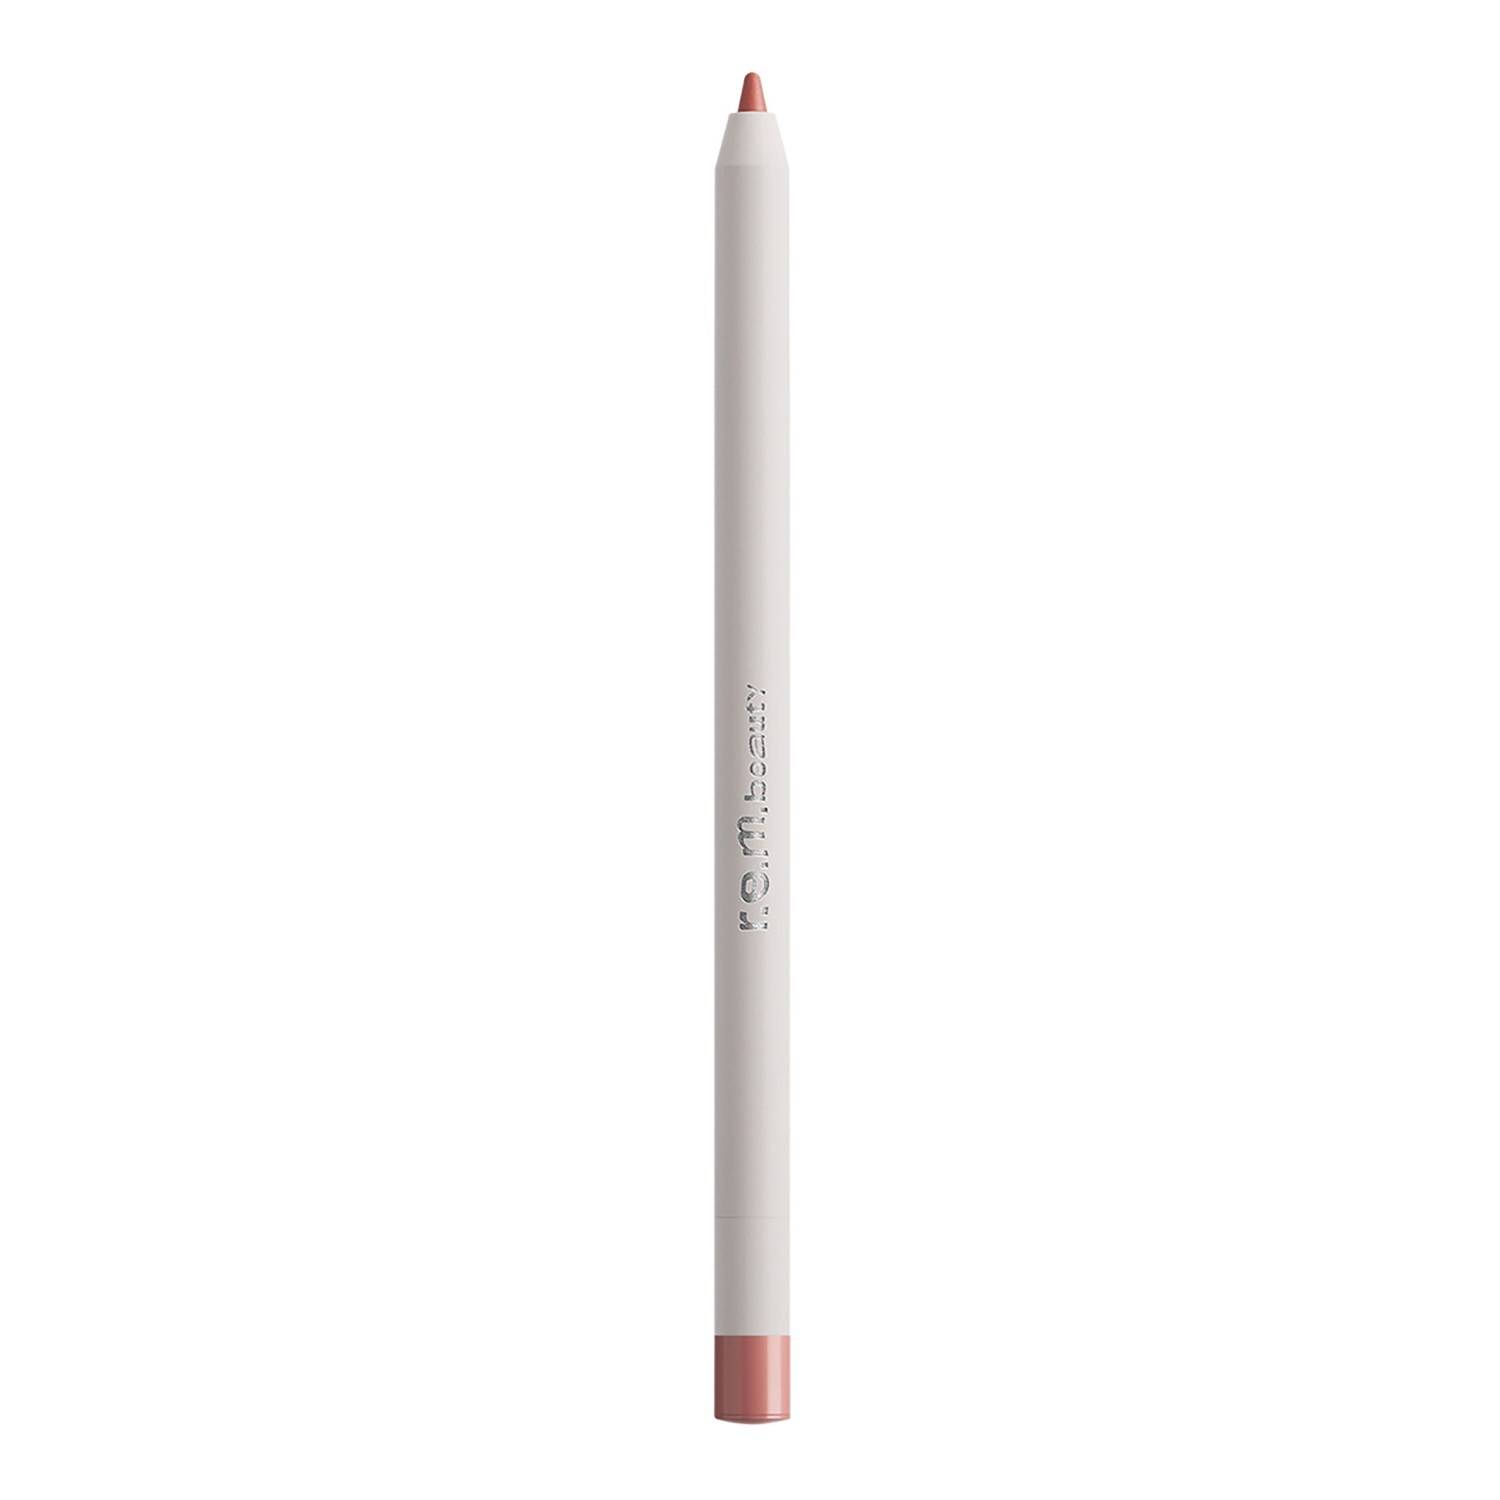 Rem Beauty At The Borderline Lip Liner Pencil 0.5G Harmonies Honey Beige Nude